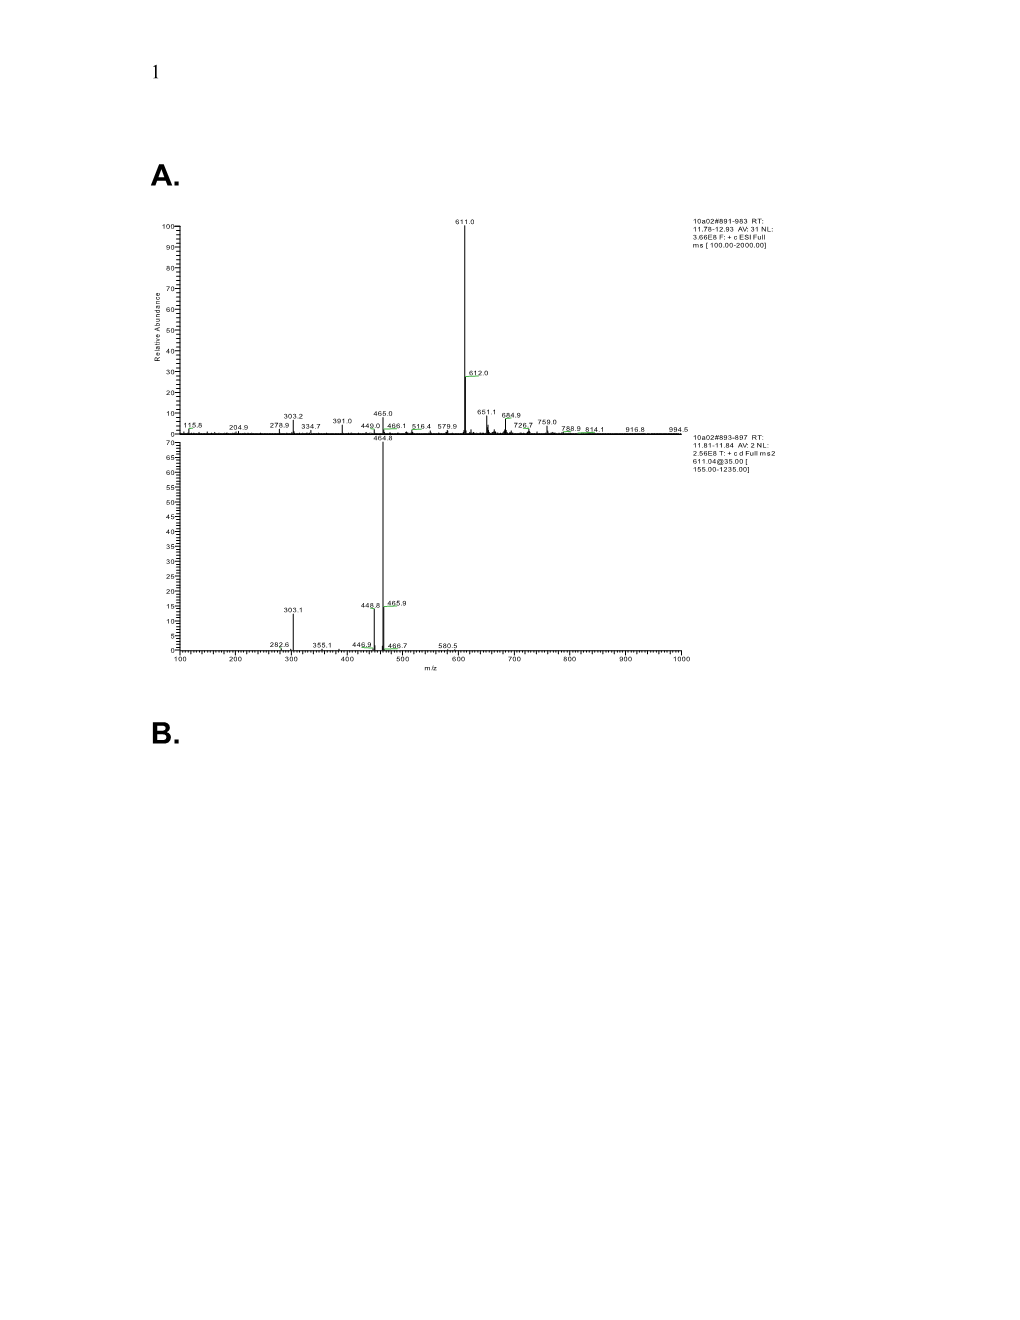 Supplemental Figure S1. Ion Fragmentation Analysis of Anthocyanins Present in Wild Type